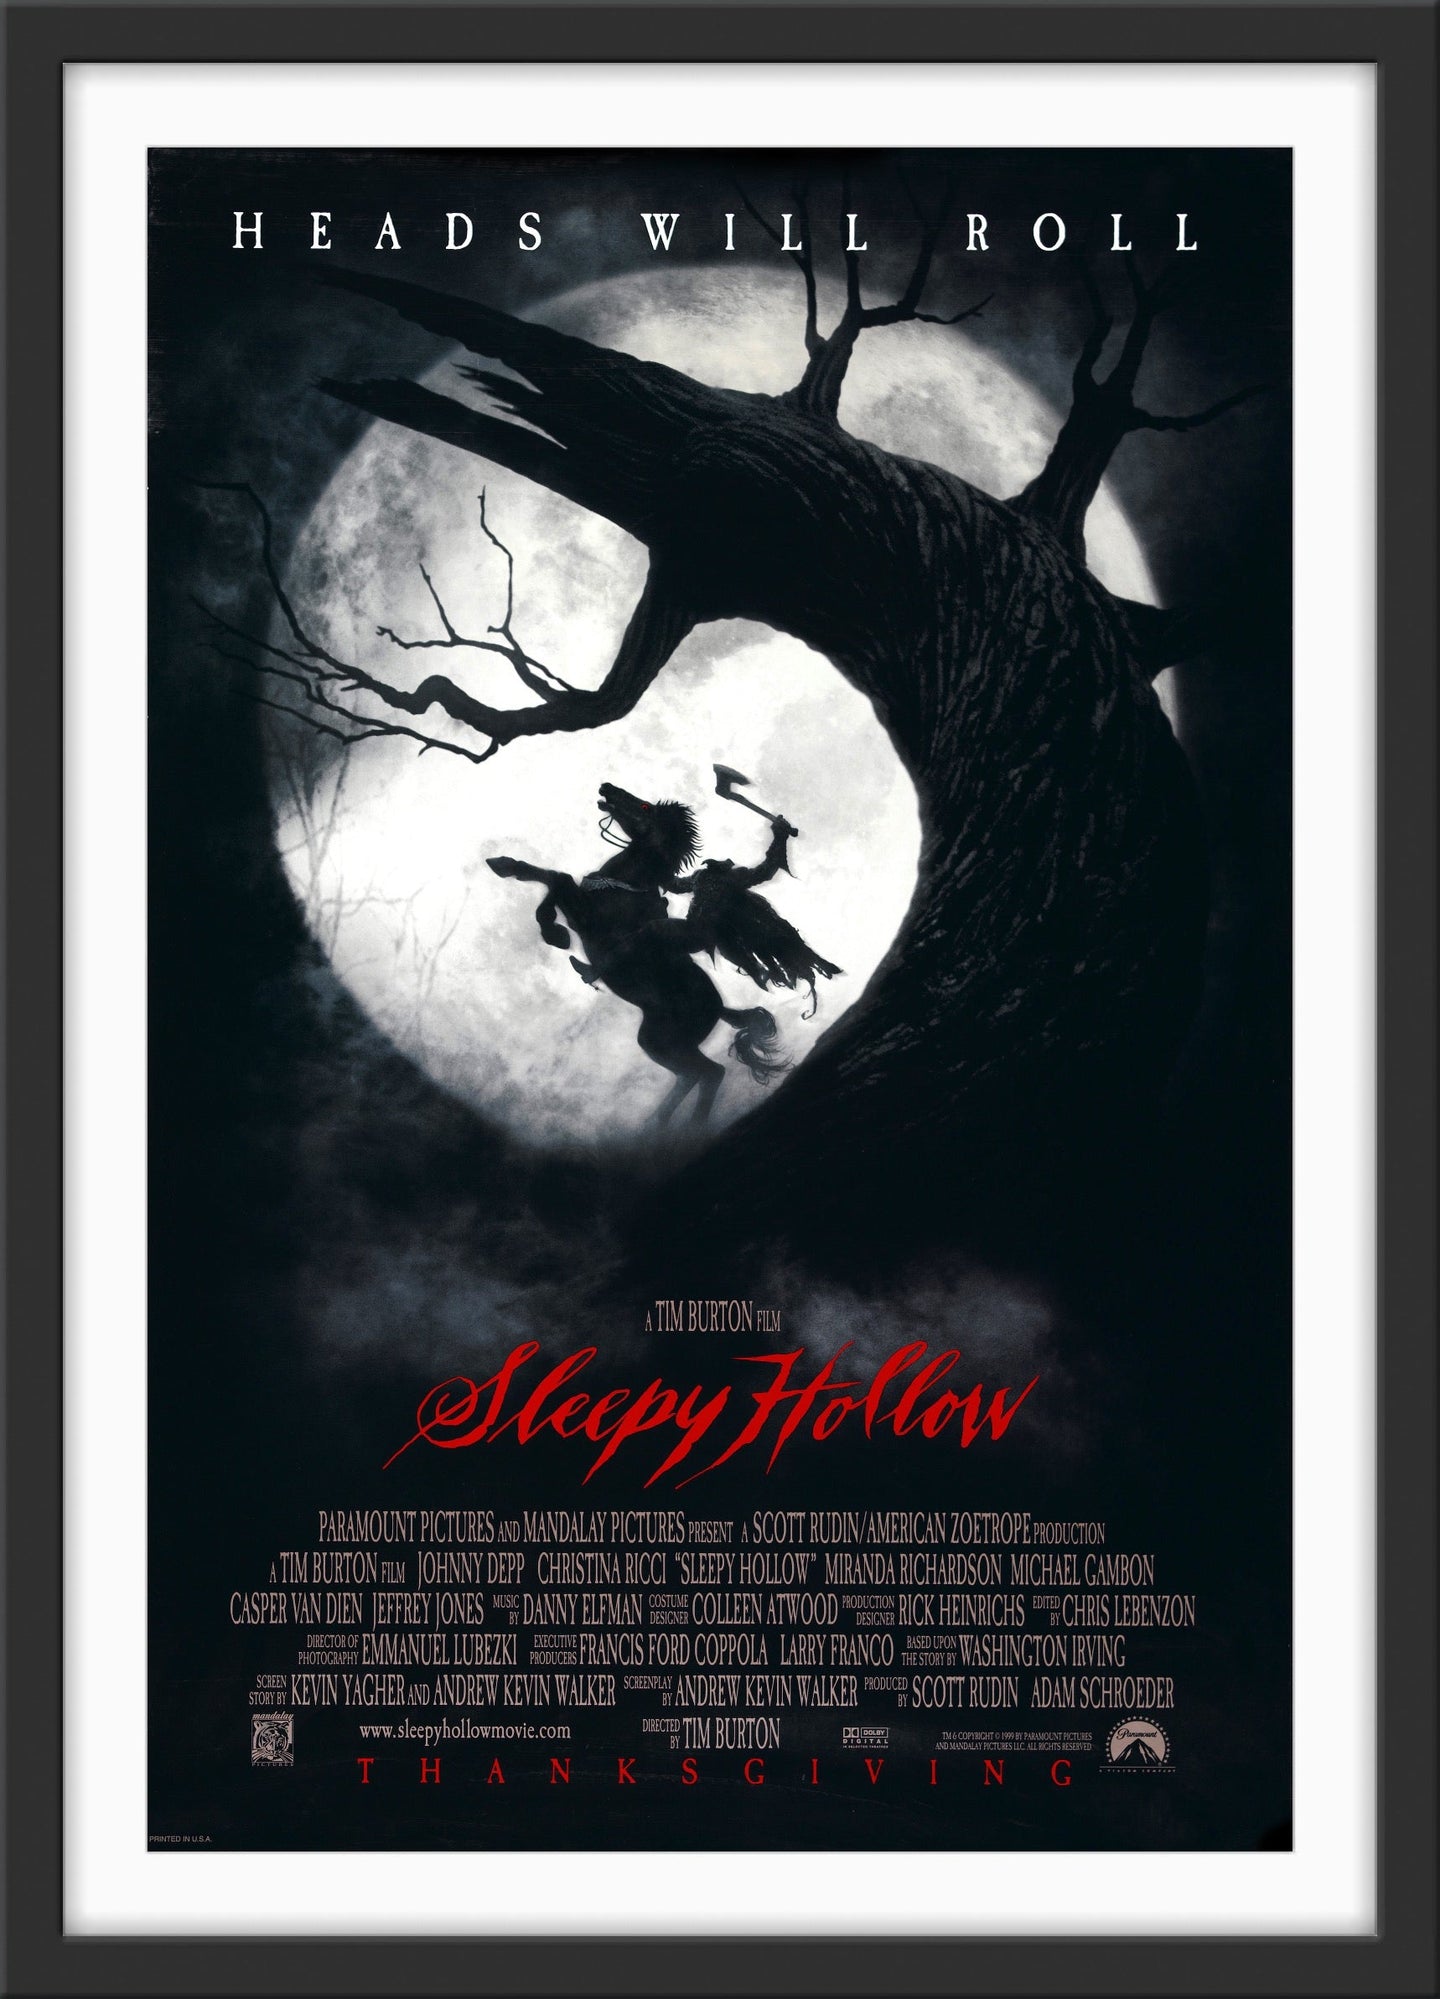 An original movie poster for the Tim Burton film Sleepy Hollow